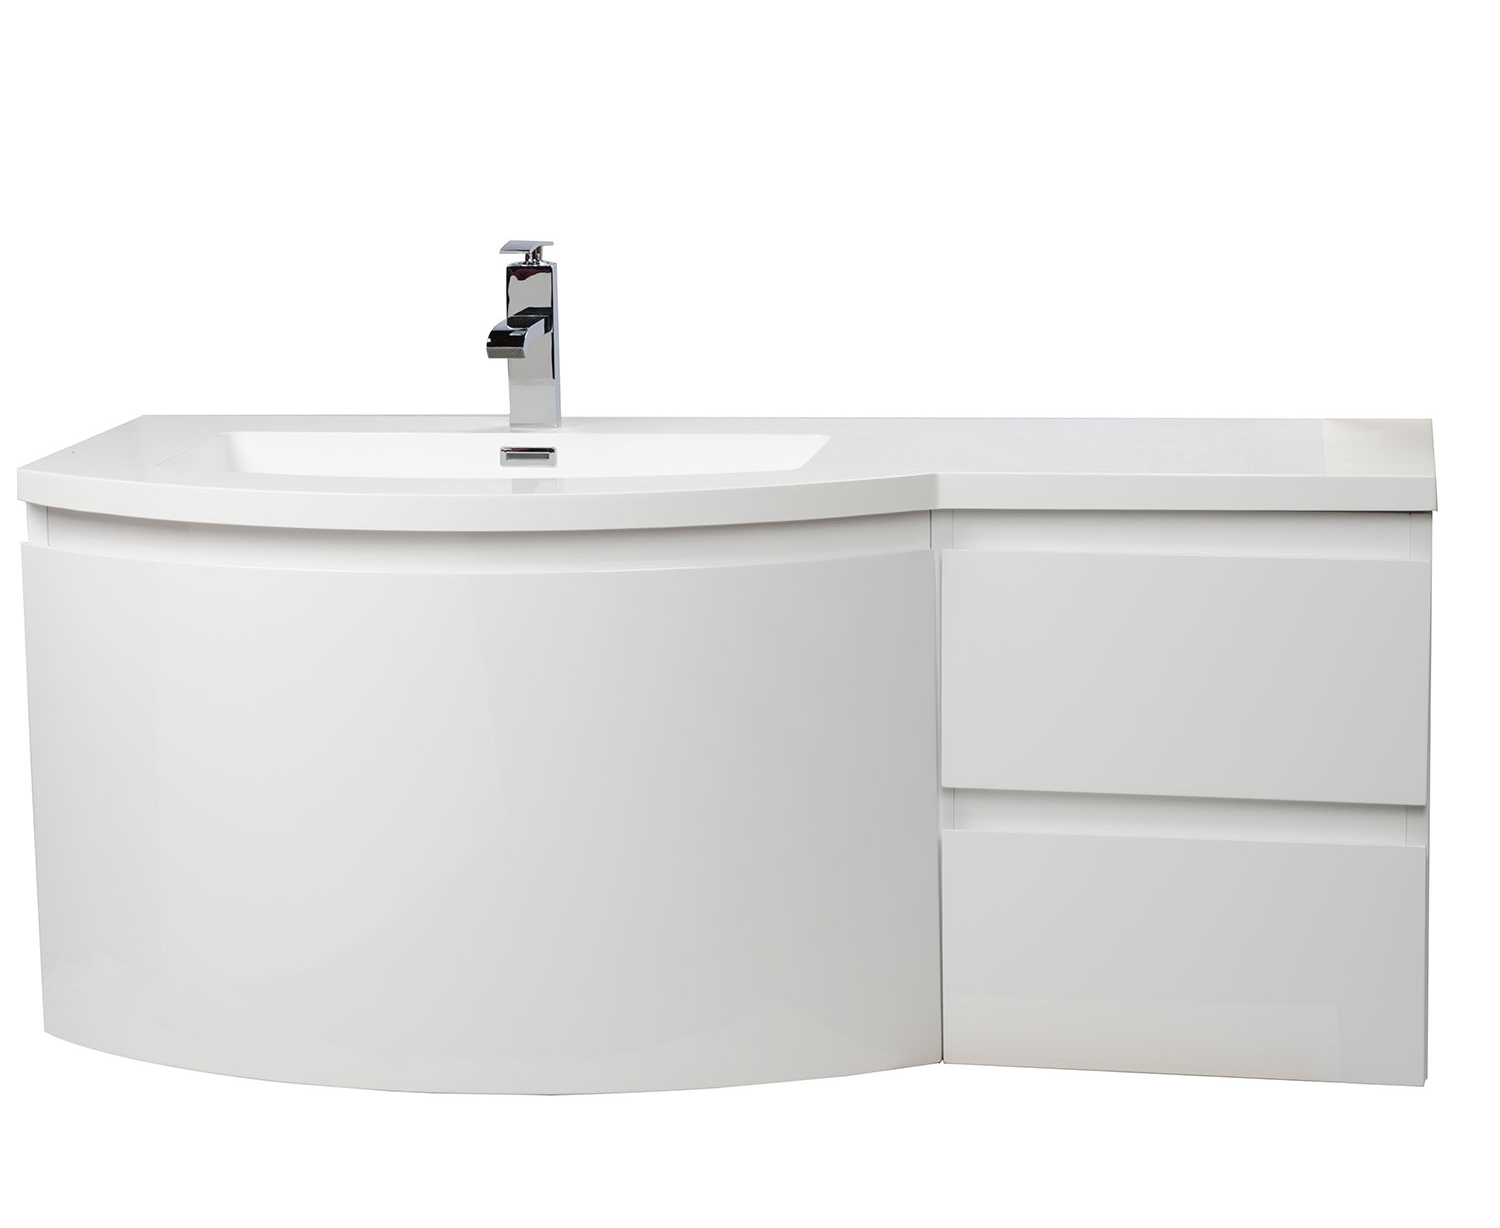 Bathroom Vanity By Cbi High Gloss White, 48 Inch Vanity Top With Sink On Left